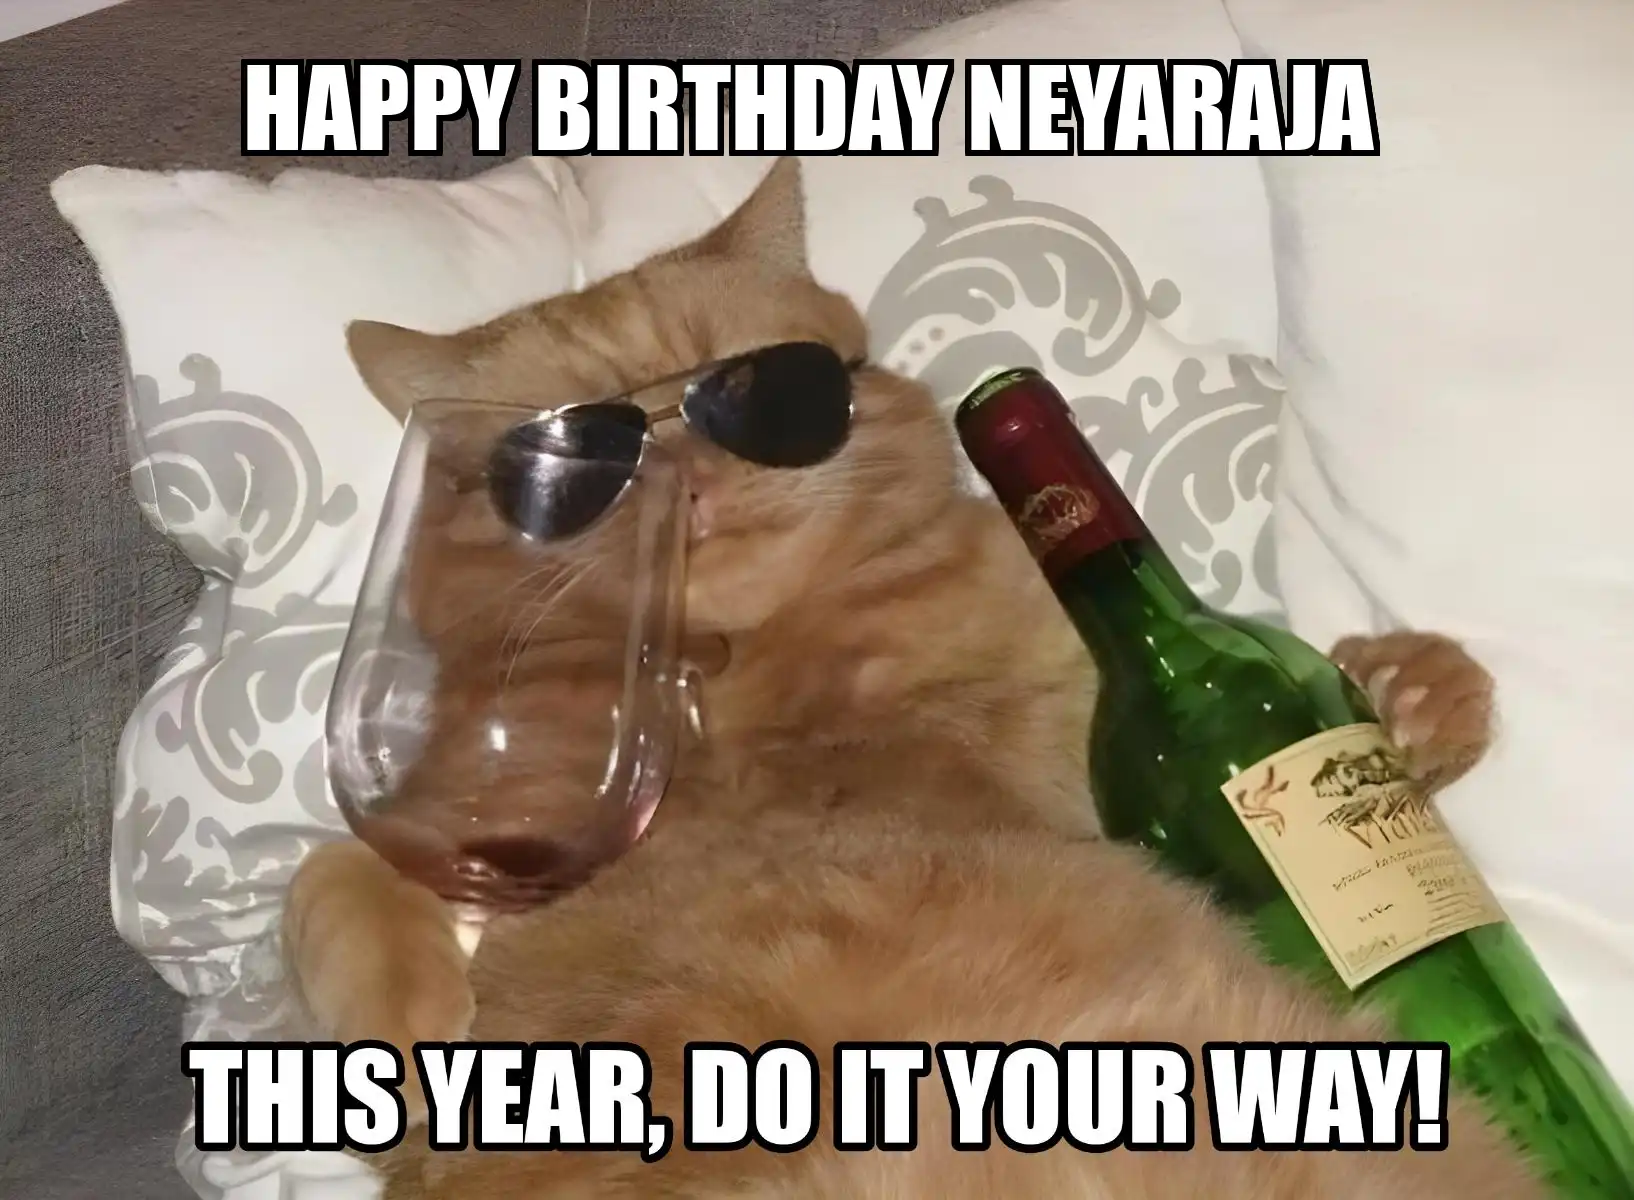 Happy Birthday Neyaraja This Year Do It Your Way Meme